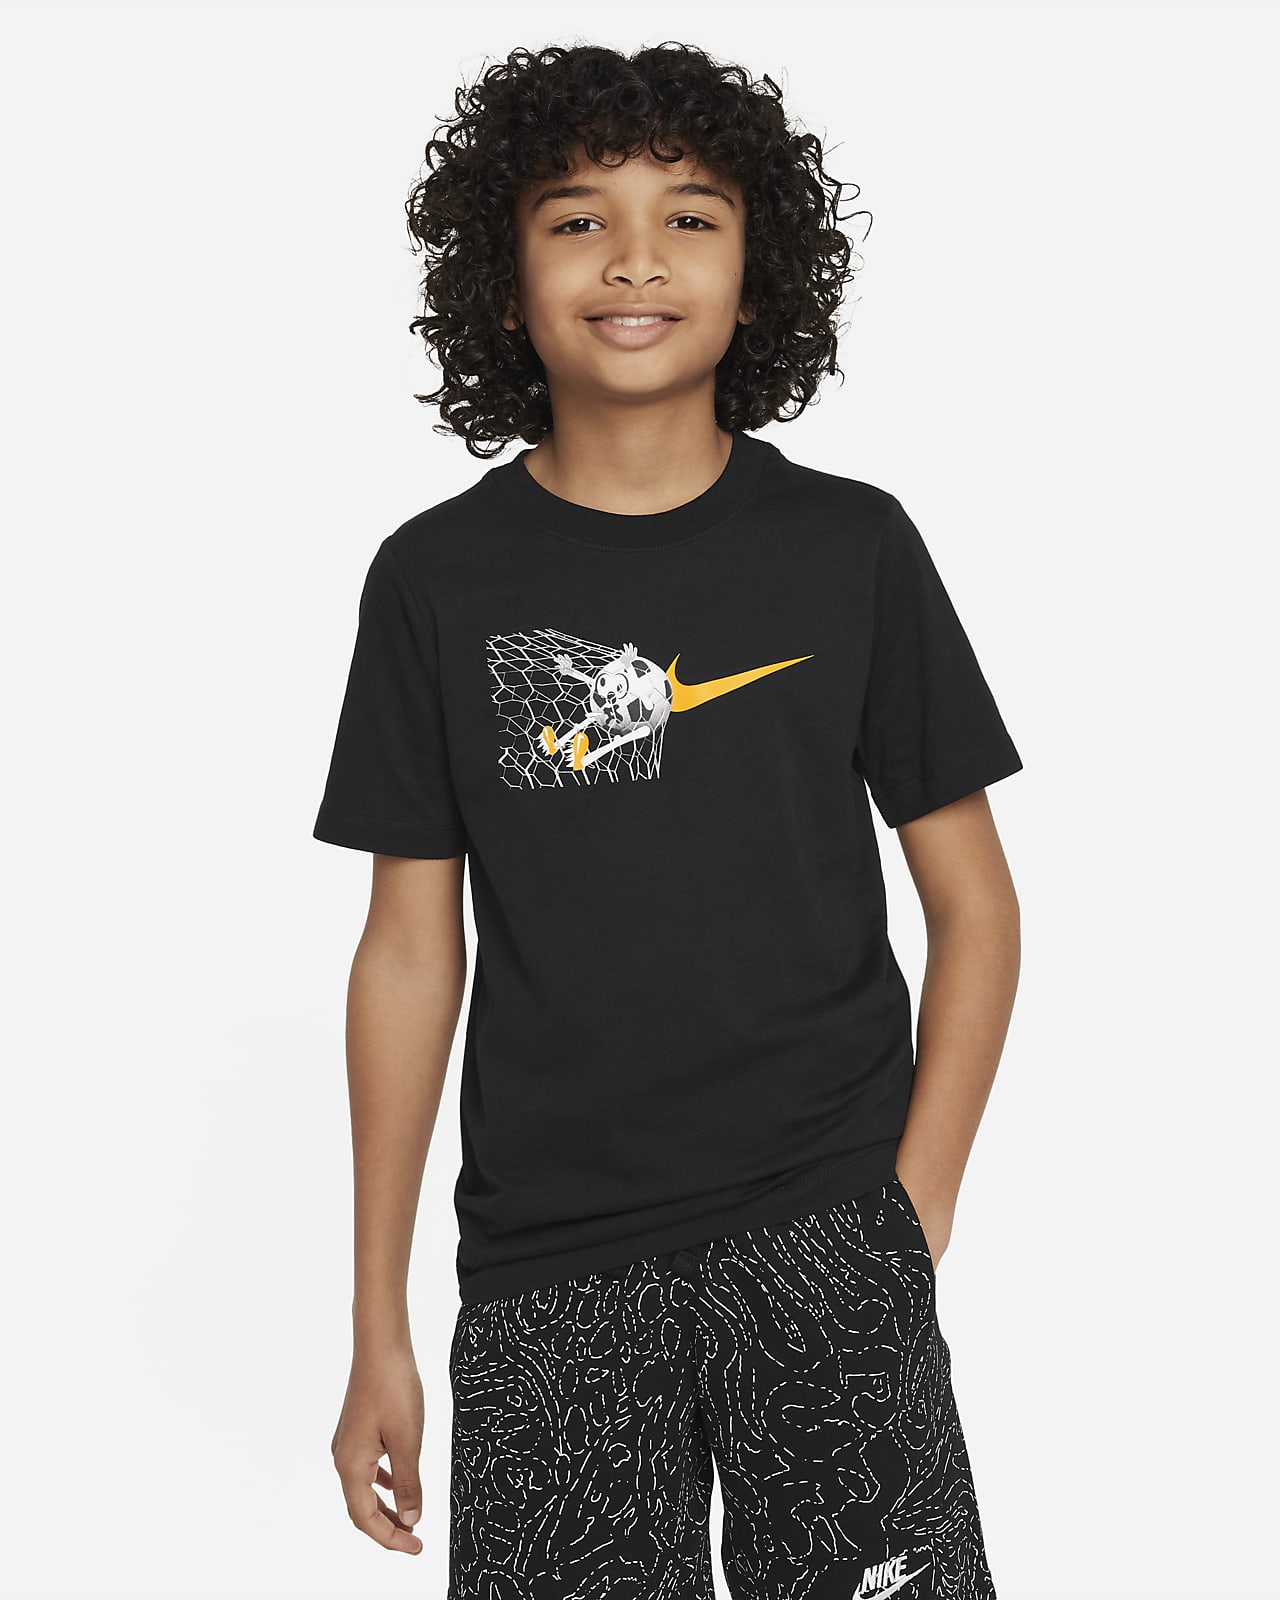 Nike Sportswear T-Shirt für ältere Kinder